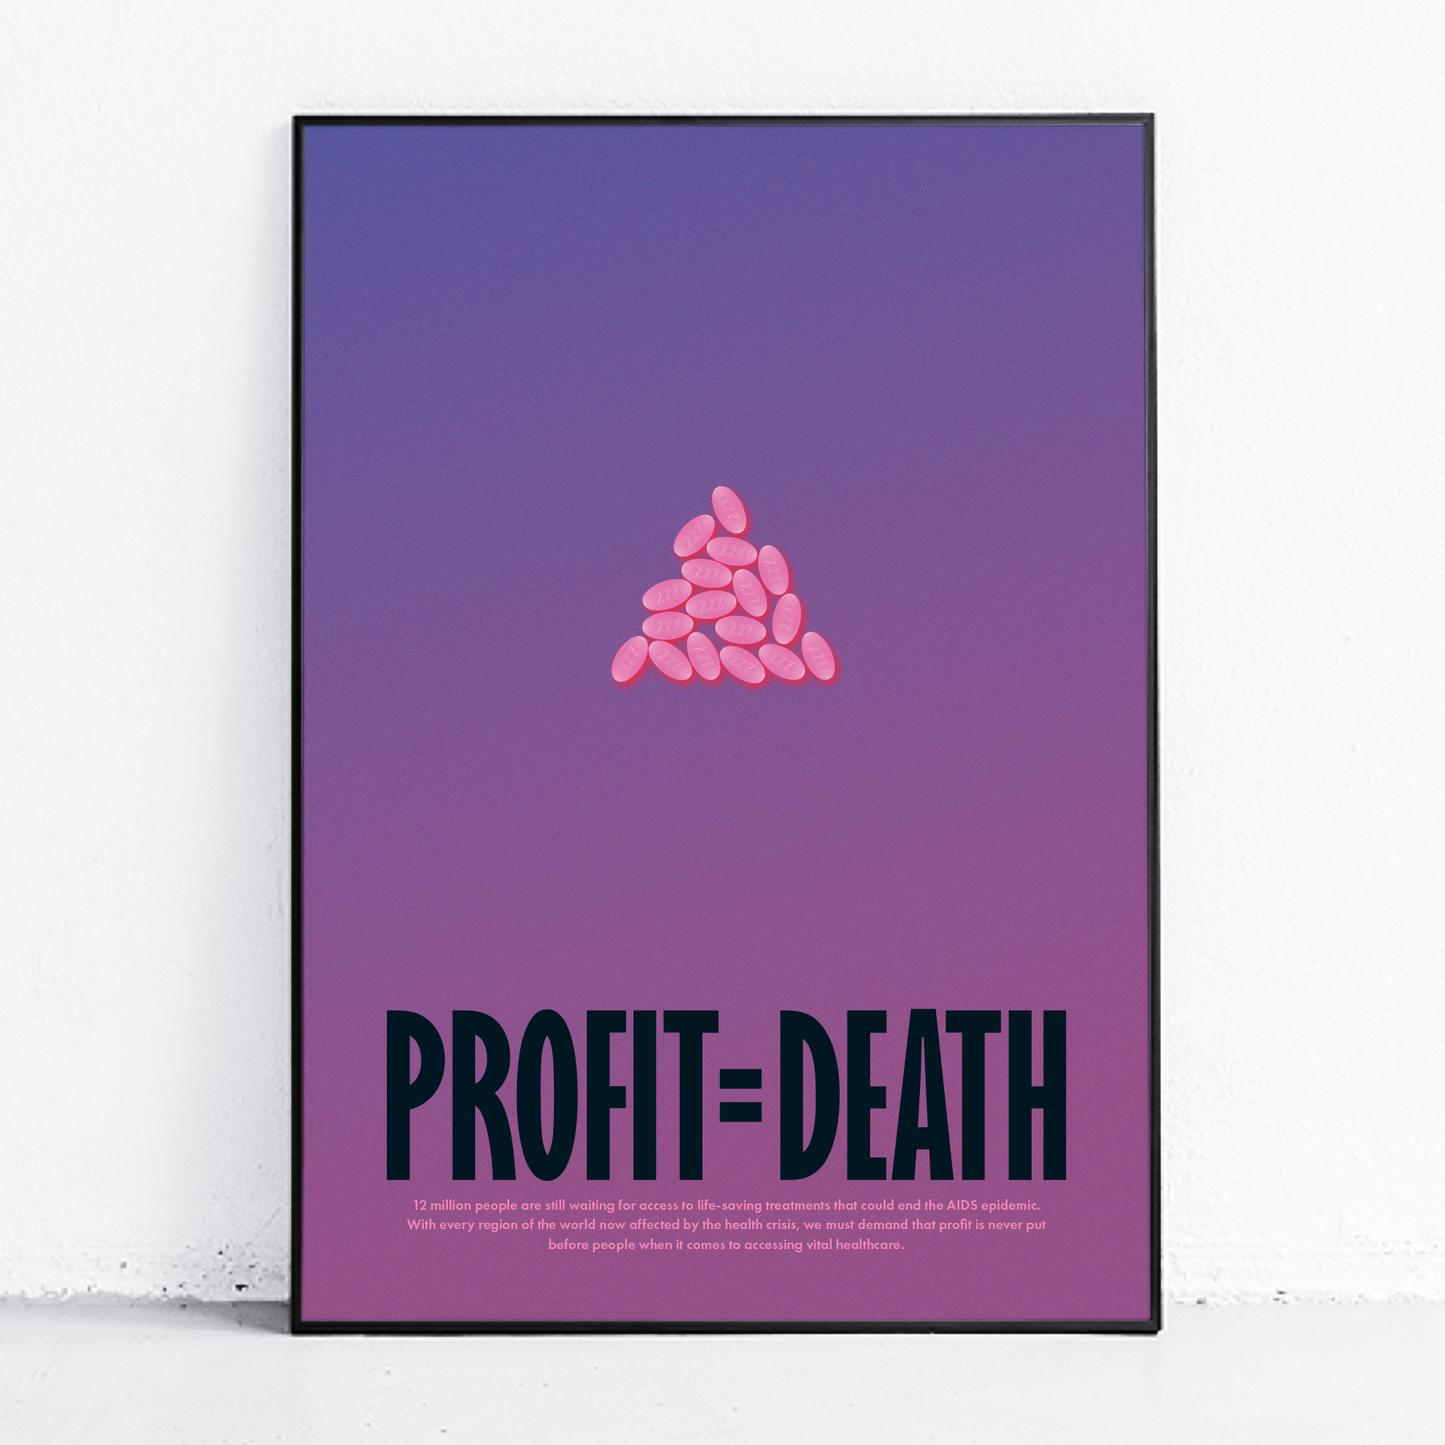 PROFIT = DEATH Art Print